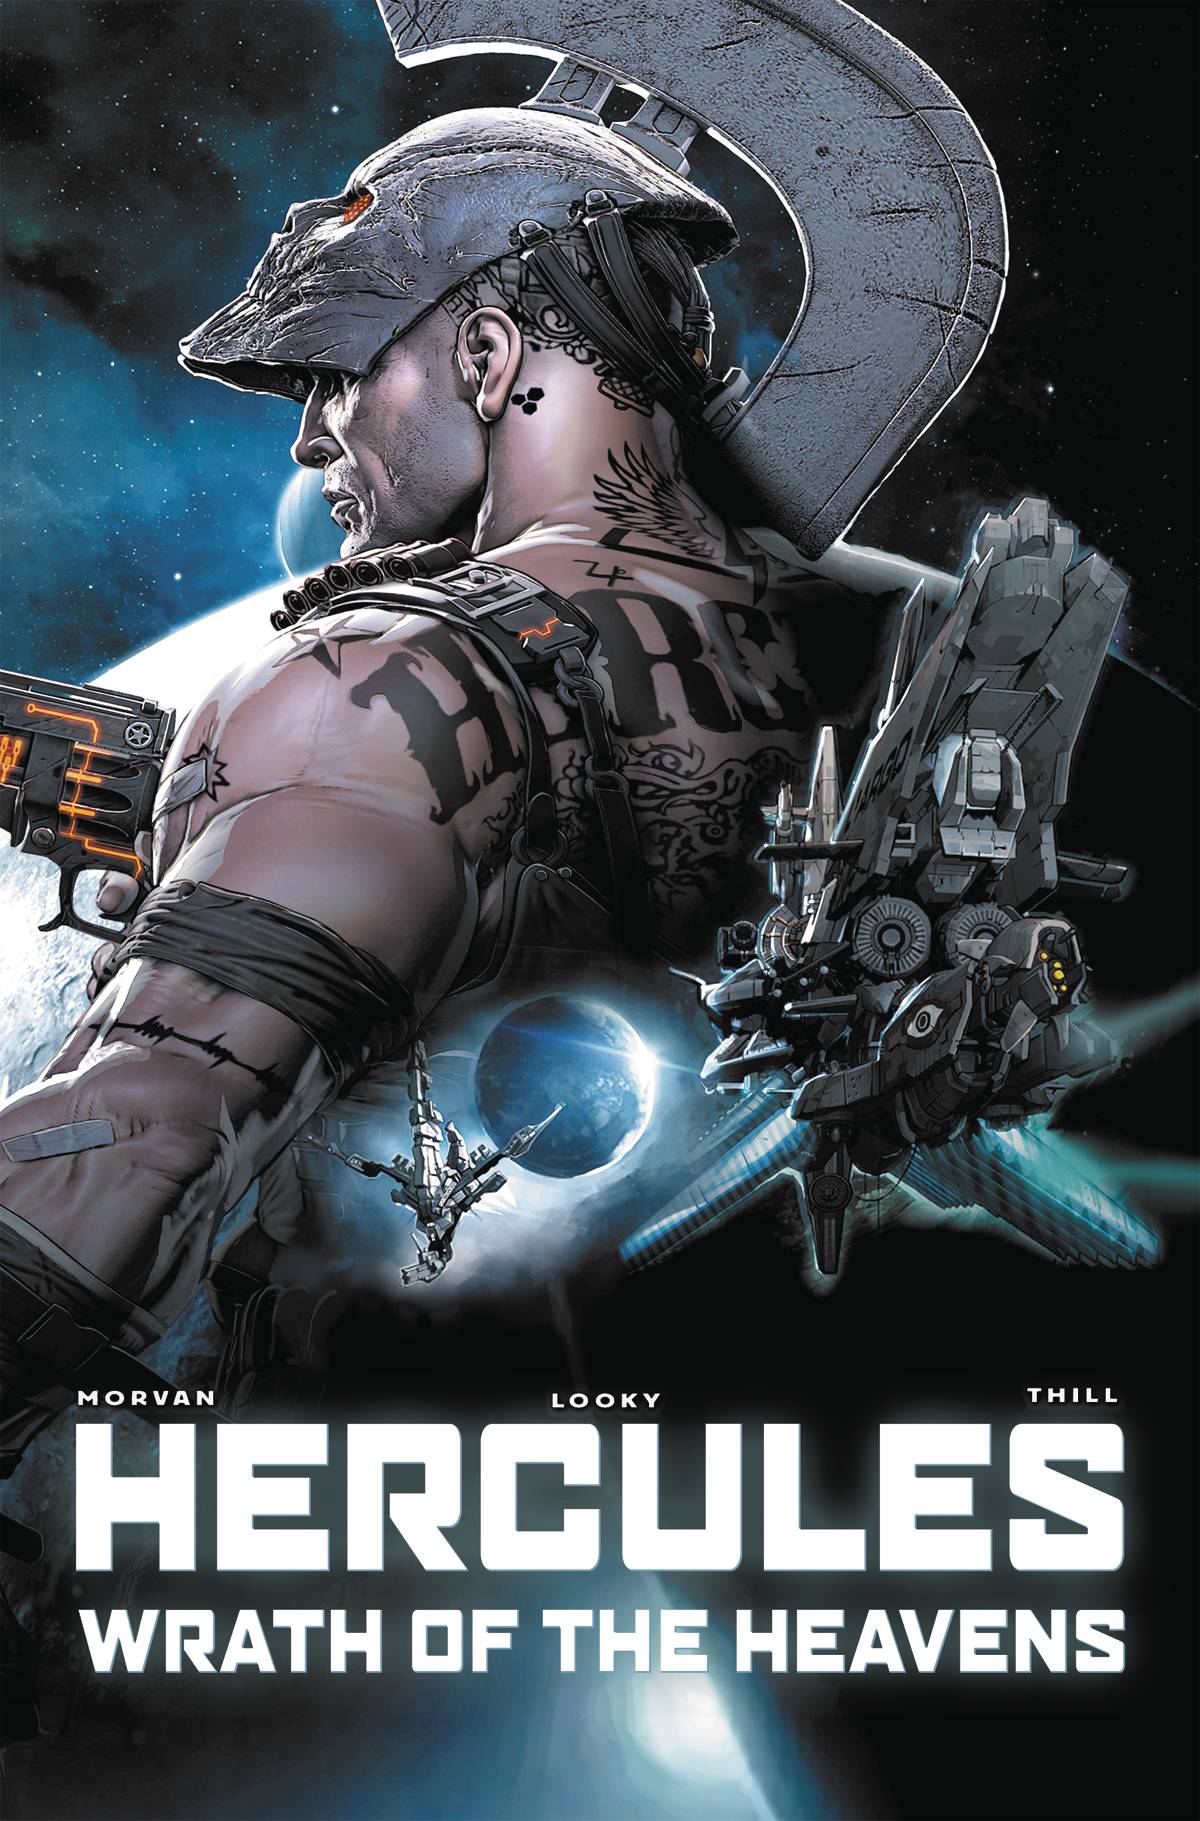 Hercules: Wrath of the Heavens